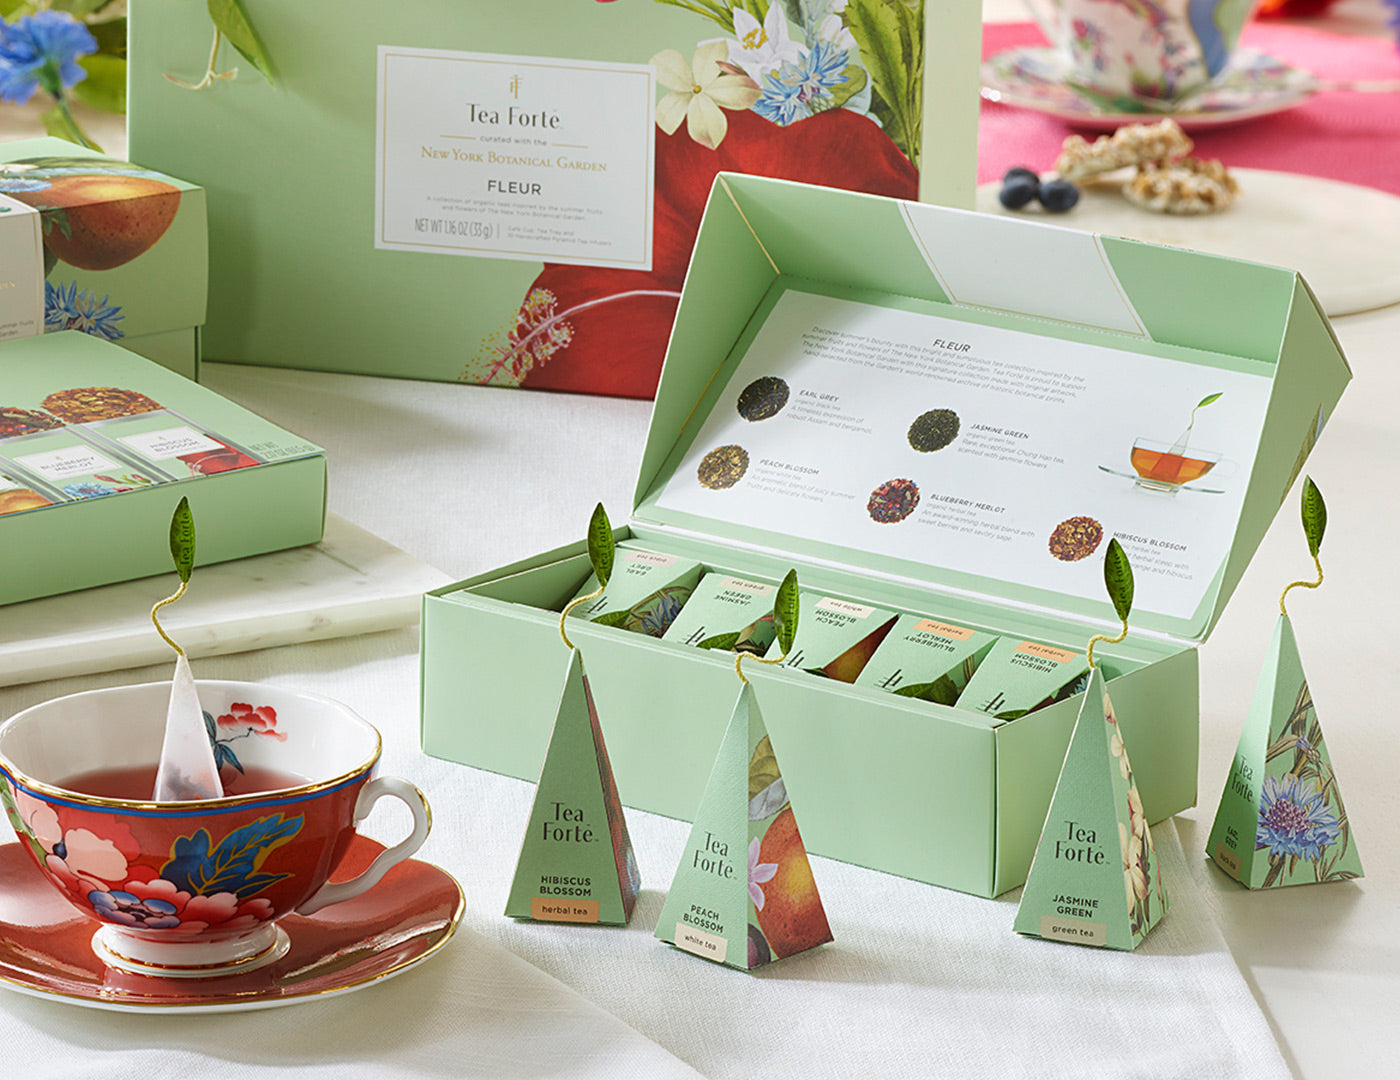 Fleur tea assortment in a 10 count petite presentation box on table